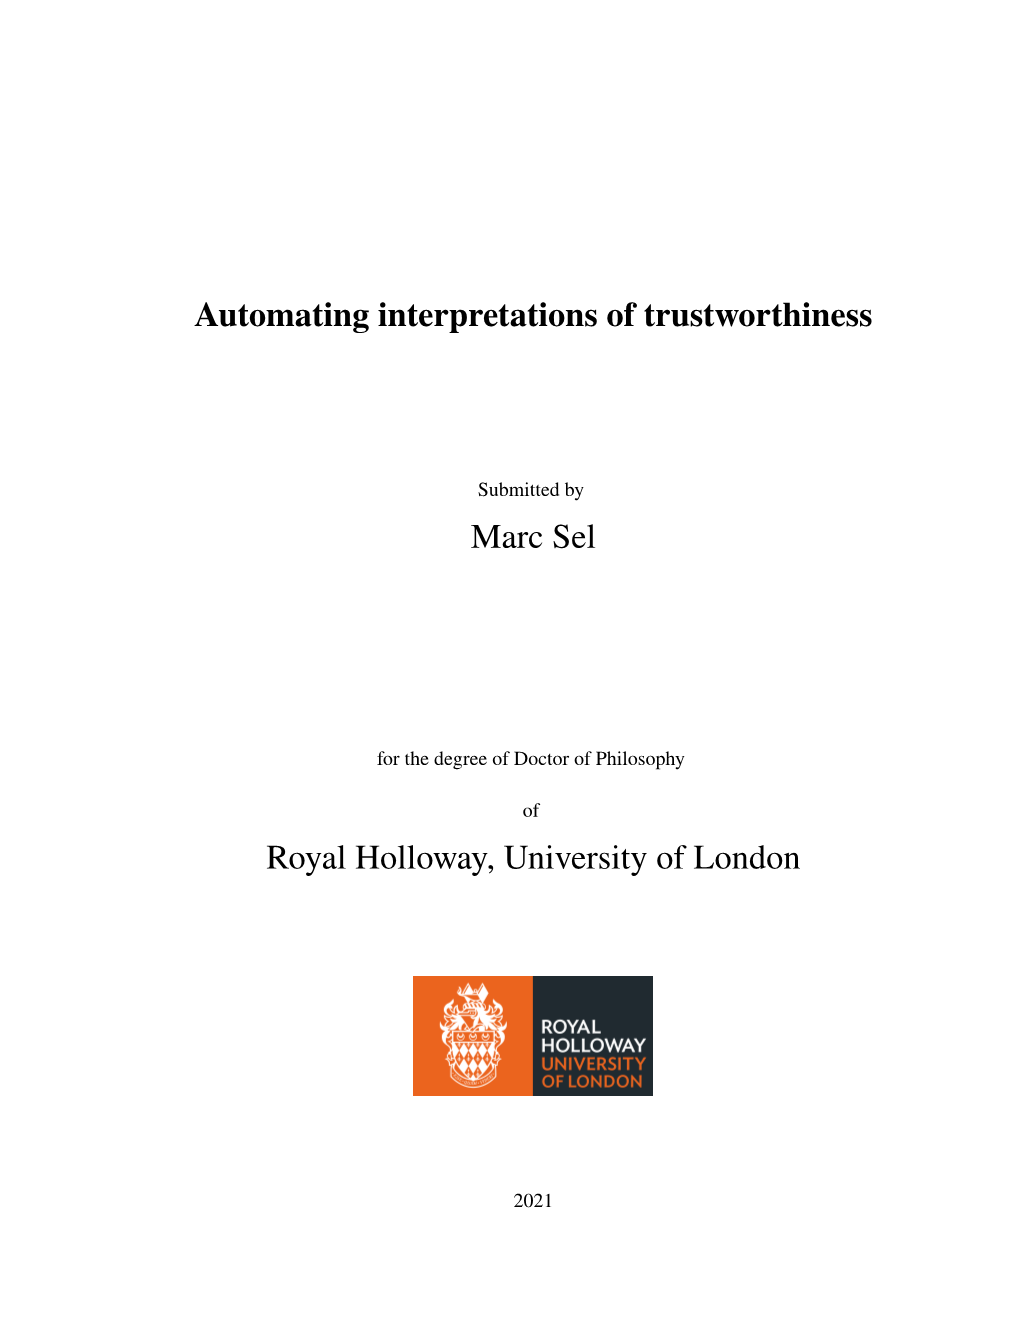 Automating Interpretations of Trustworthiness Marc Sel Royal Holloway, University of London